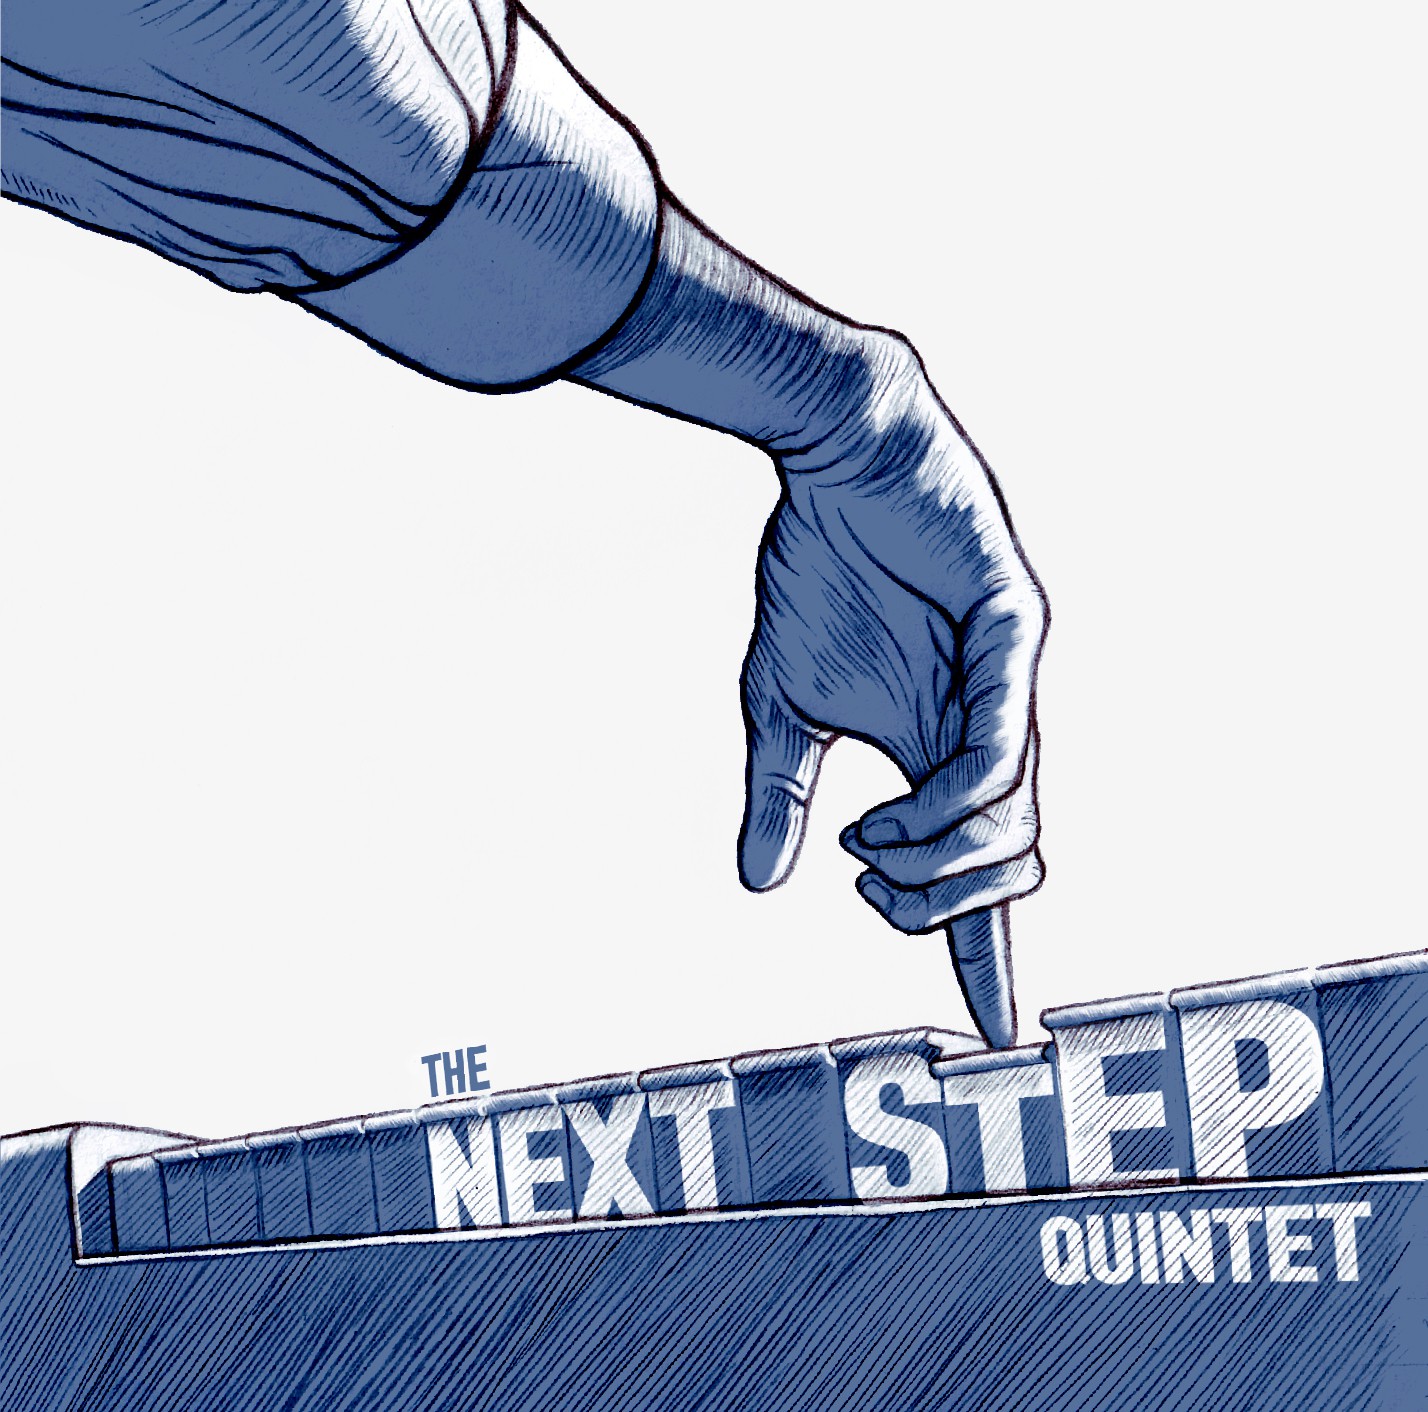 THE NEXT STEP QUINTET-THE NEXT STEP QUINTET